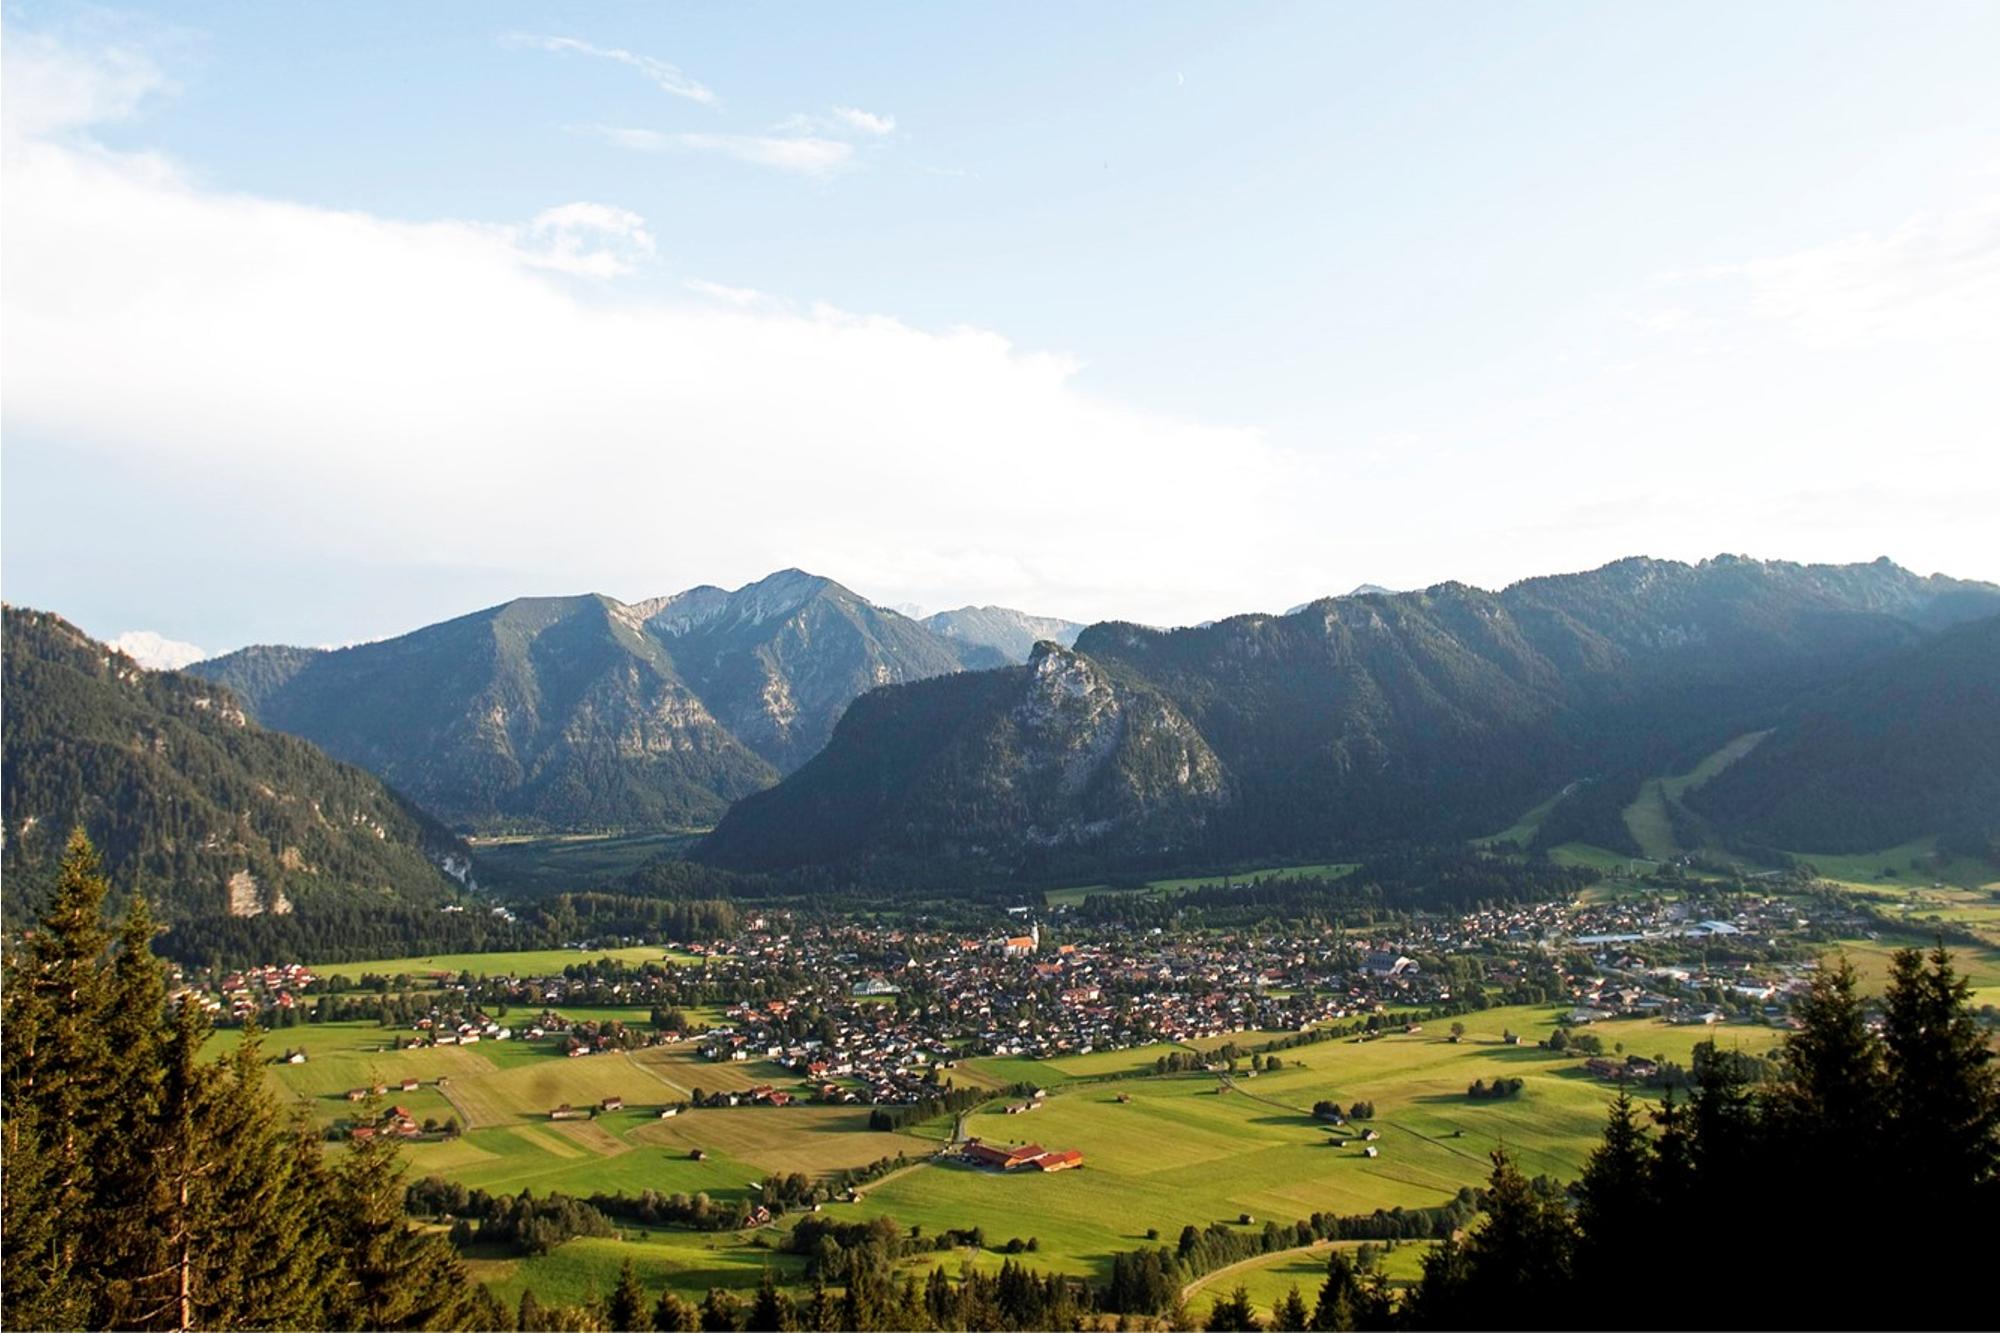 Oberammergau Passionsspiele: Exploring a Sacred Theatre - Part 2